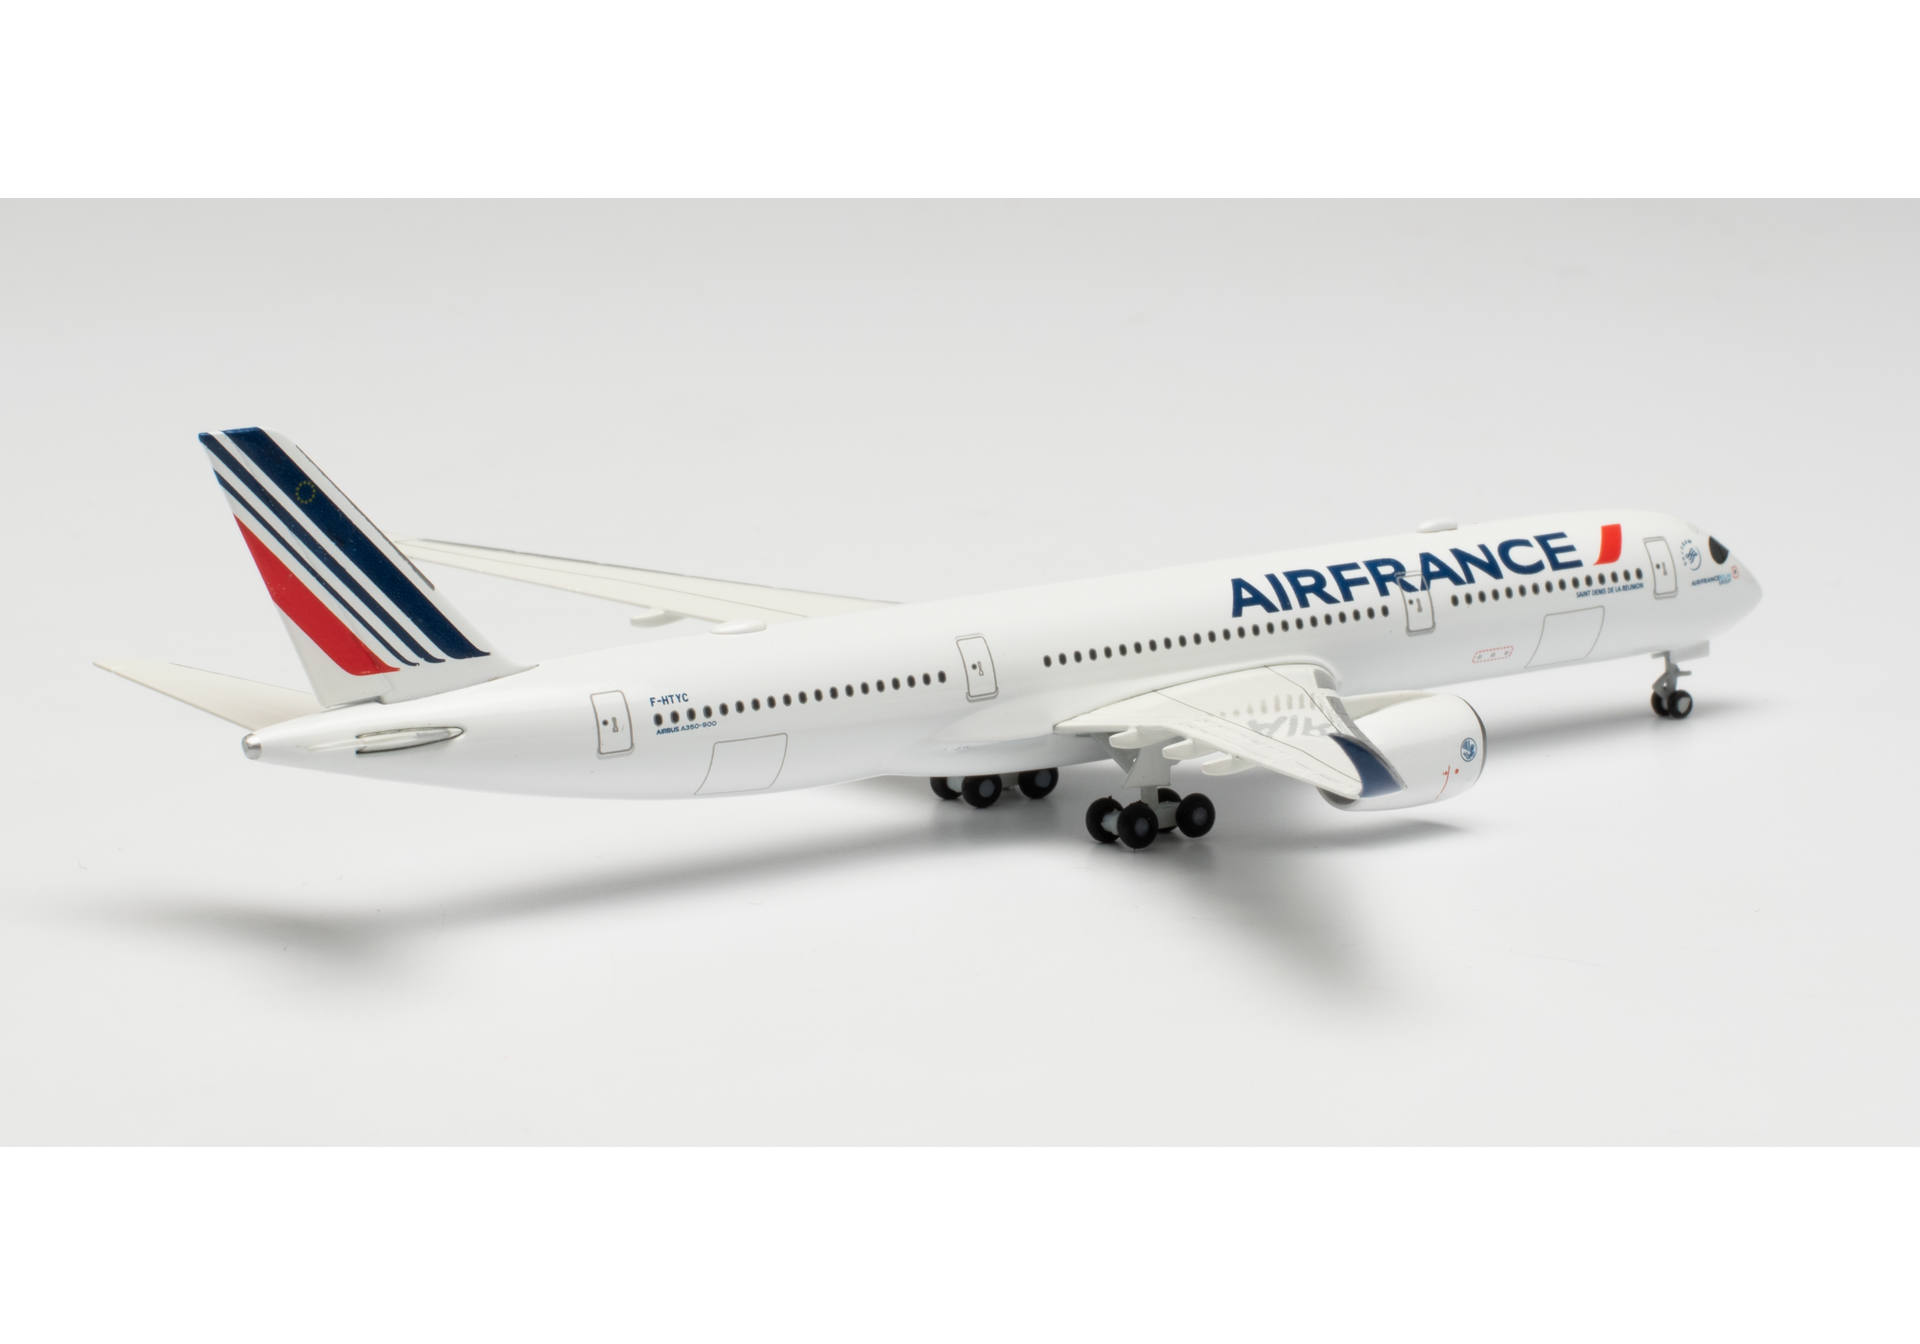   Air France Airbus A350-900  F-HTYC, 1:500, 533478-001. # 2 hobbyplus.ru